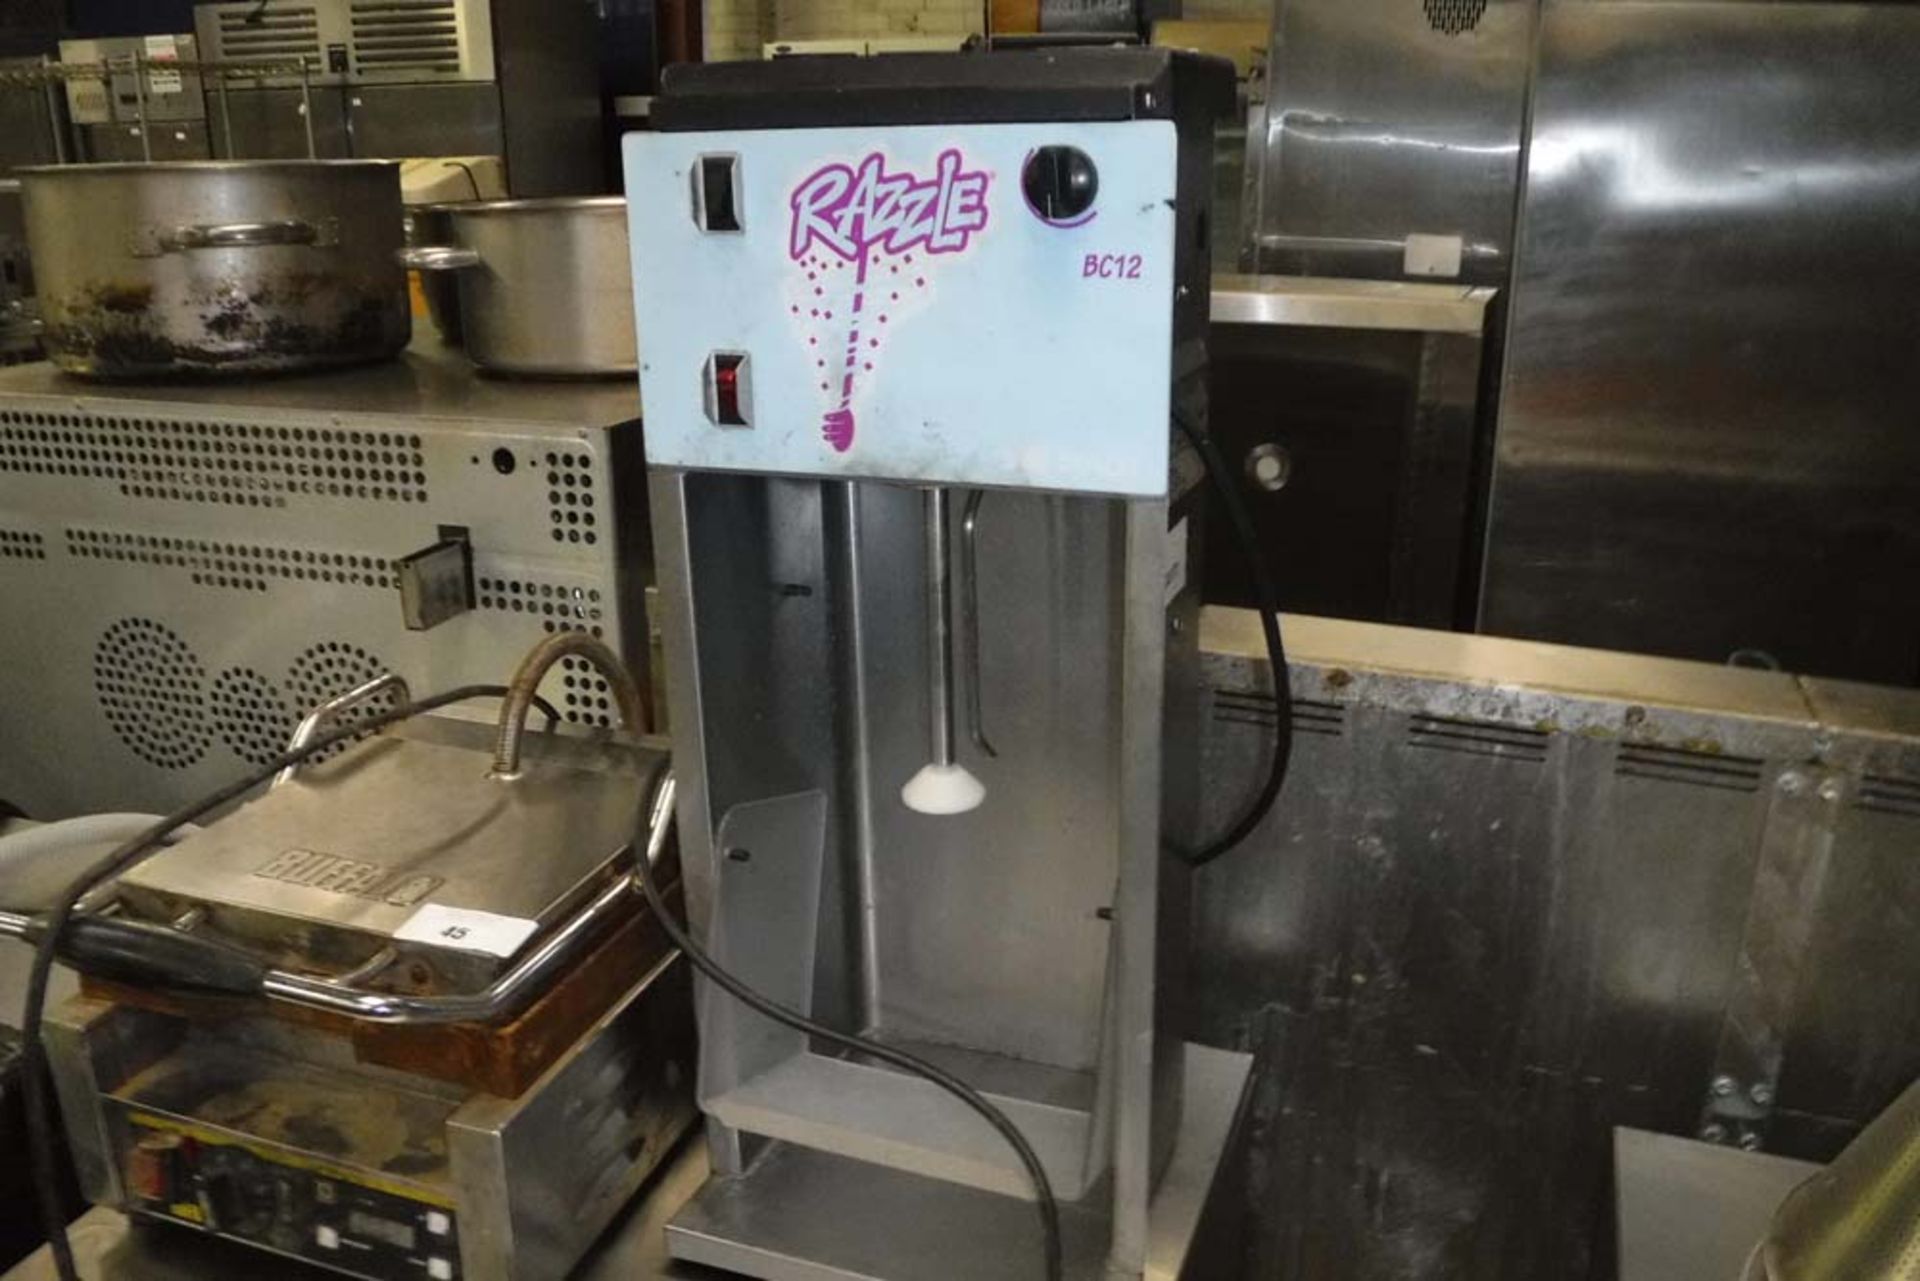 Taylor Razzle BC12 milkshake machine (14)